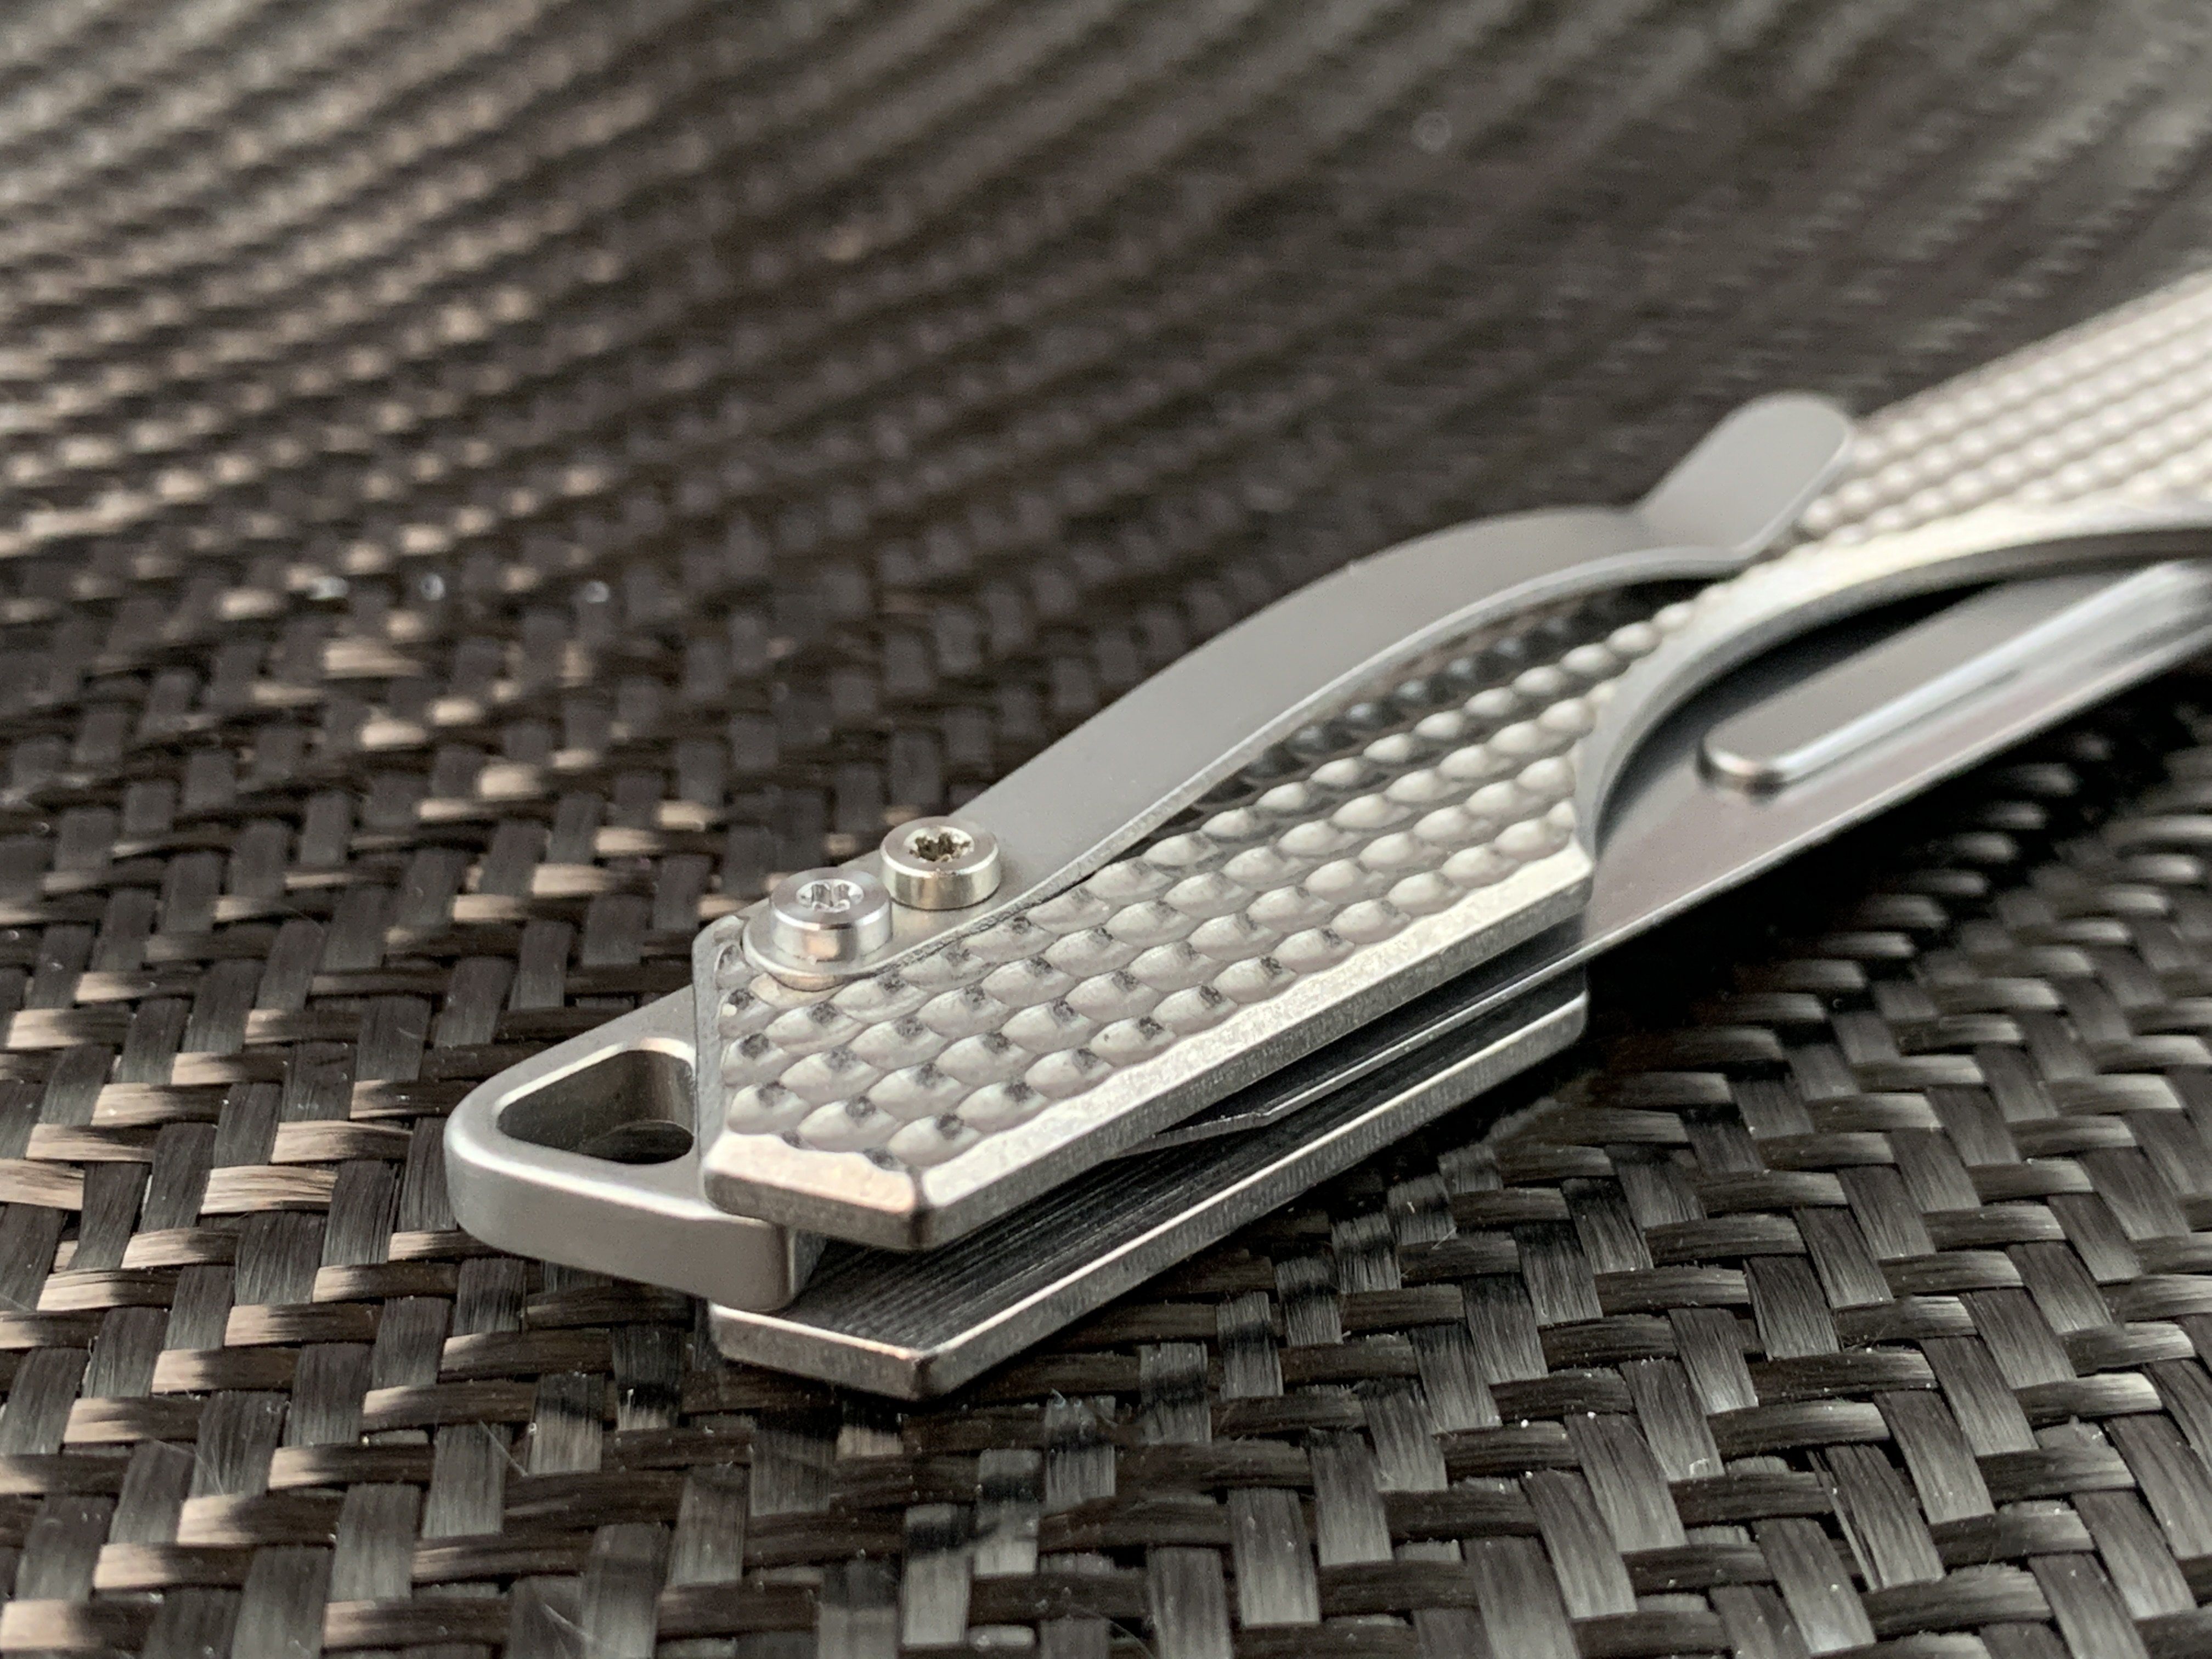 TiBlade 02  Titanium Replaceable Blade Scalpel Pocket Knife – Korcraft